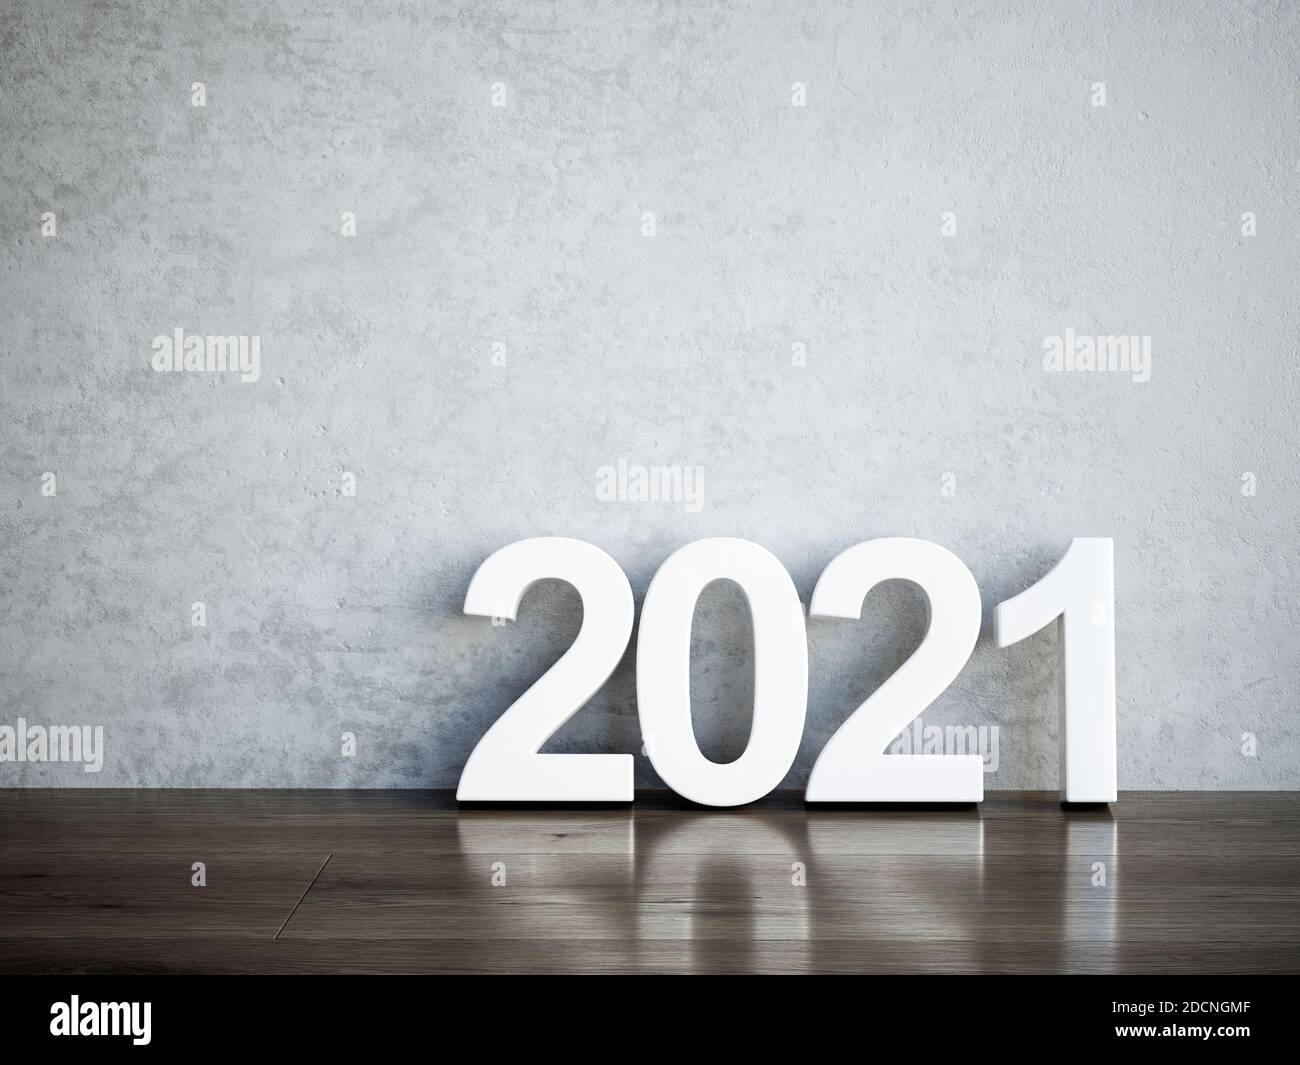 2021 text empty room interior concept. 3d rendering illustration Stock Photo